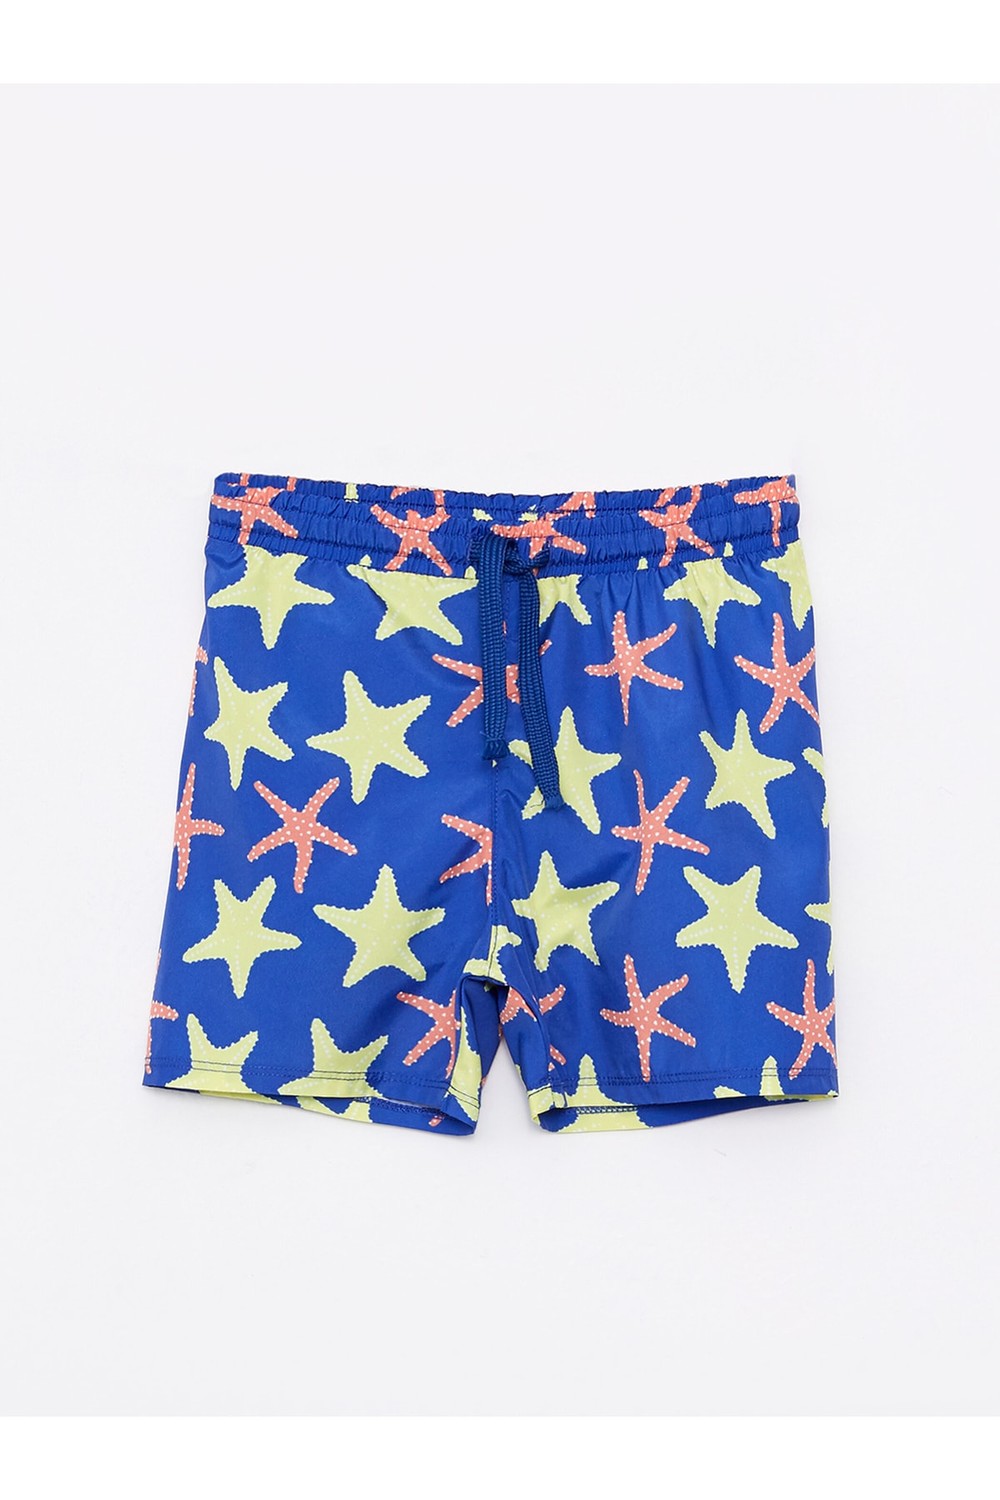 LC Waikiki Baby Boy Beach Shorts with Elastic Waist, UV Protection, and Printed